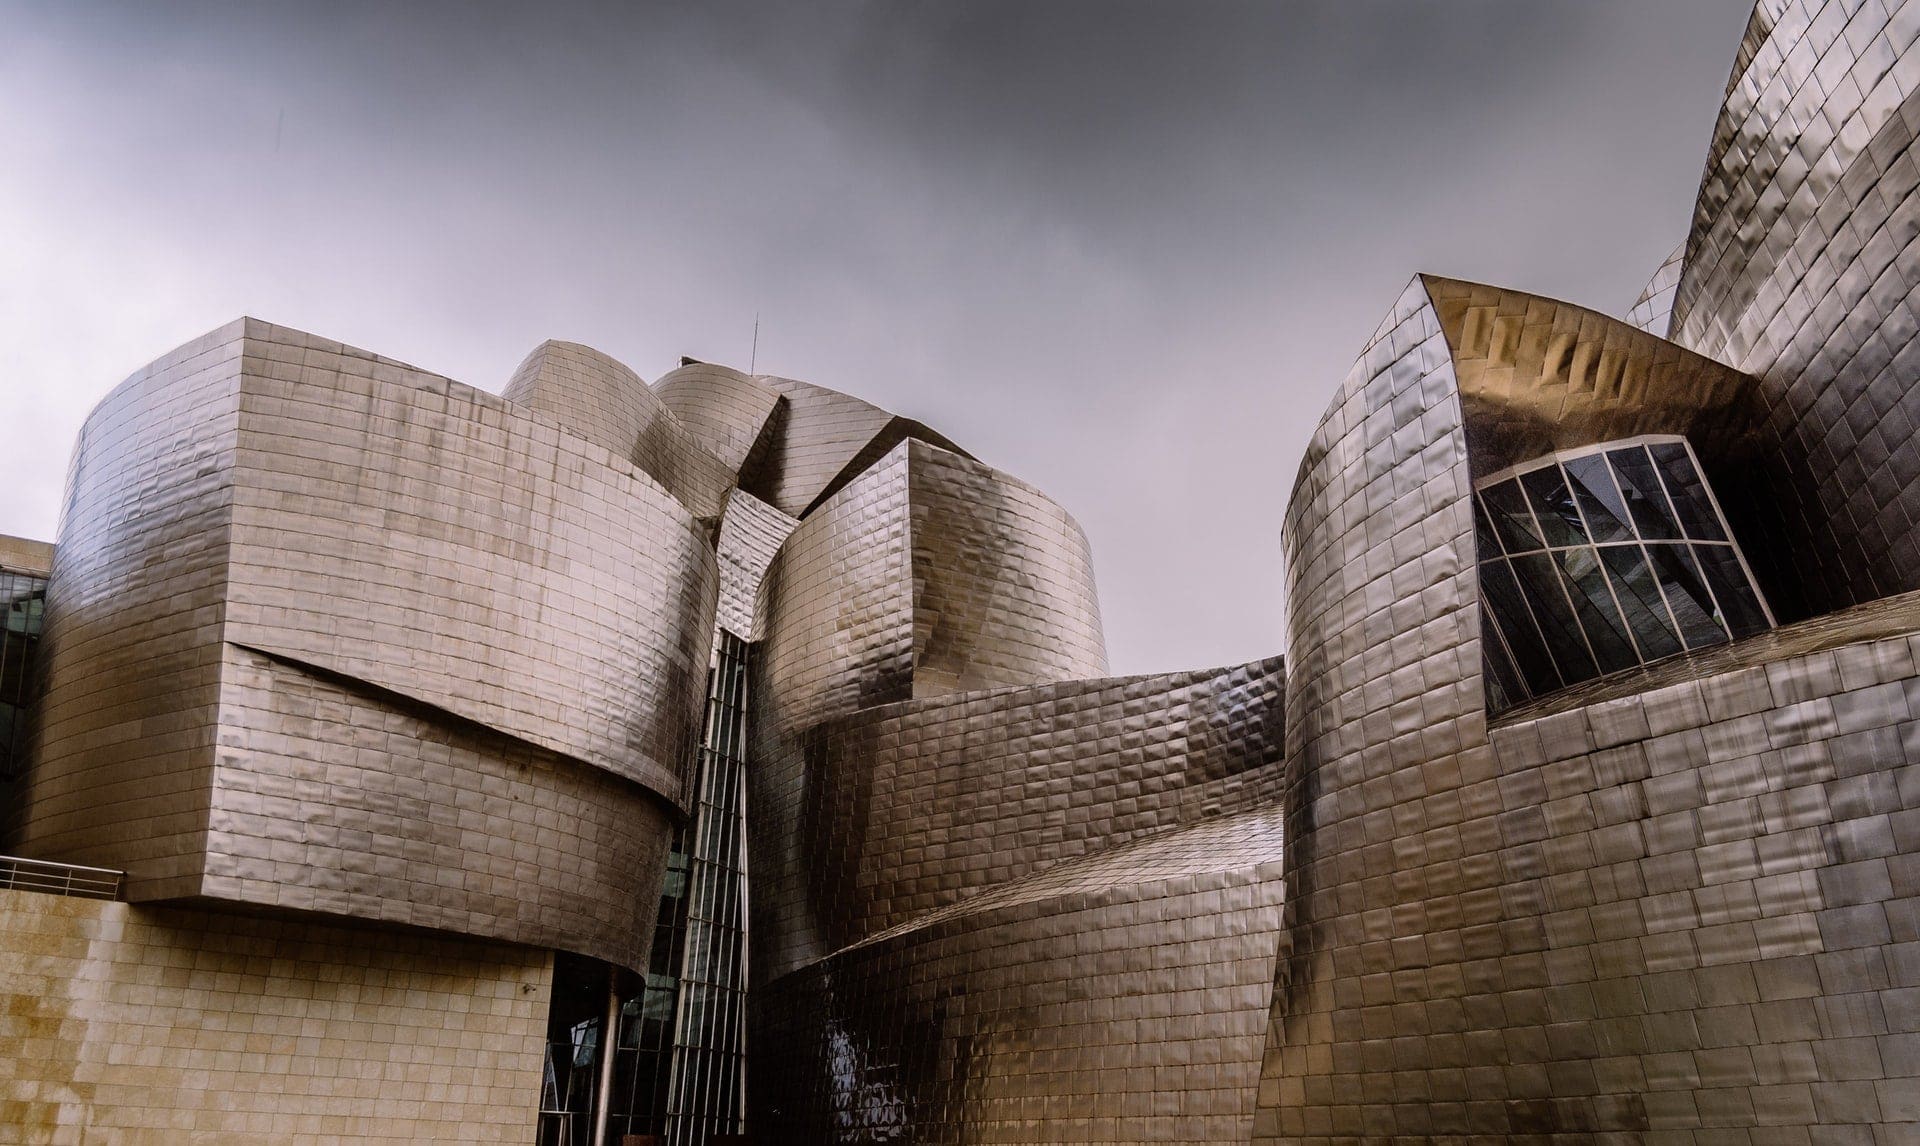 Design example - Guggenheim museum | Kicking Pixels